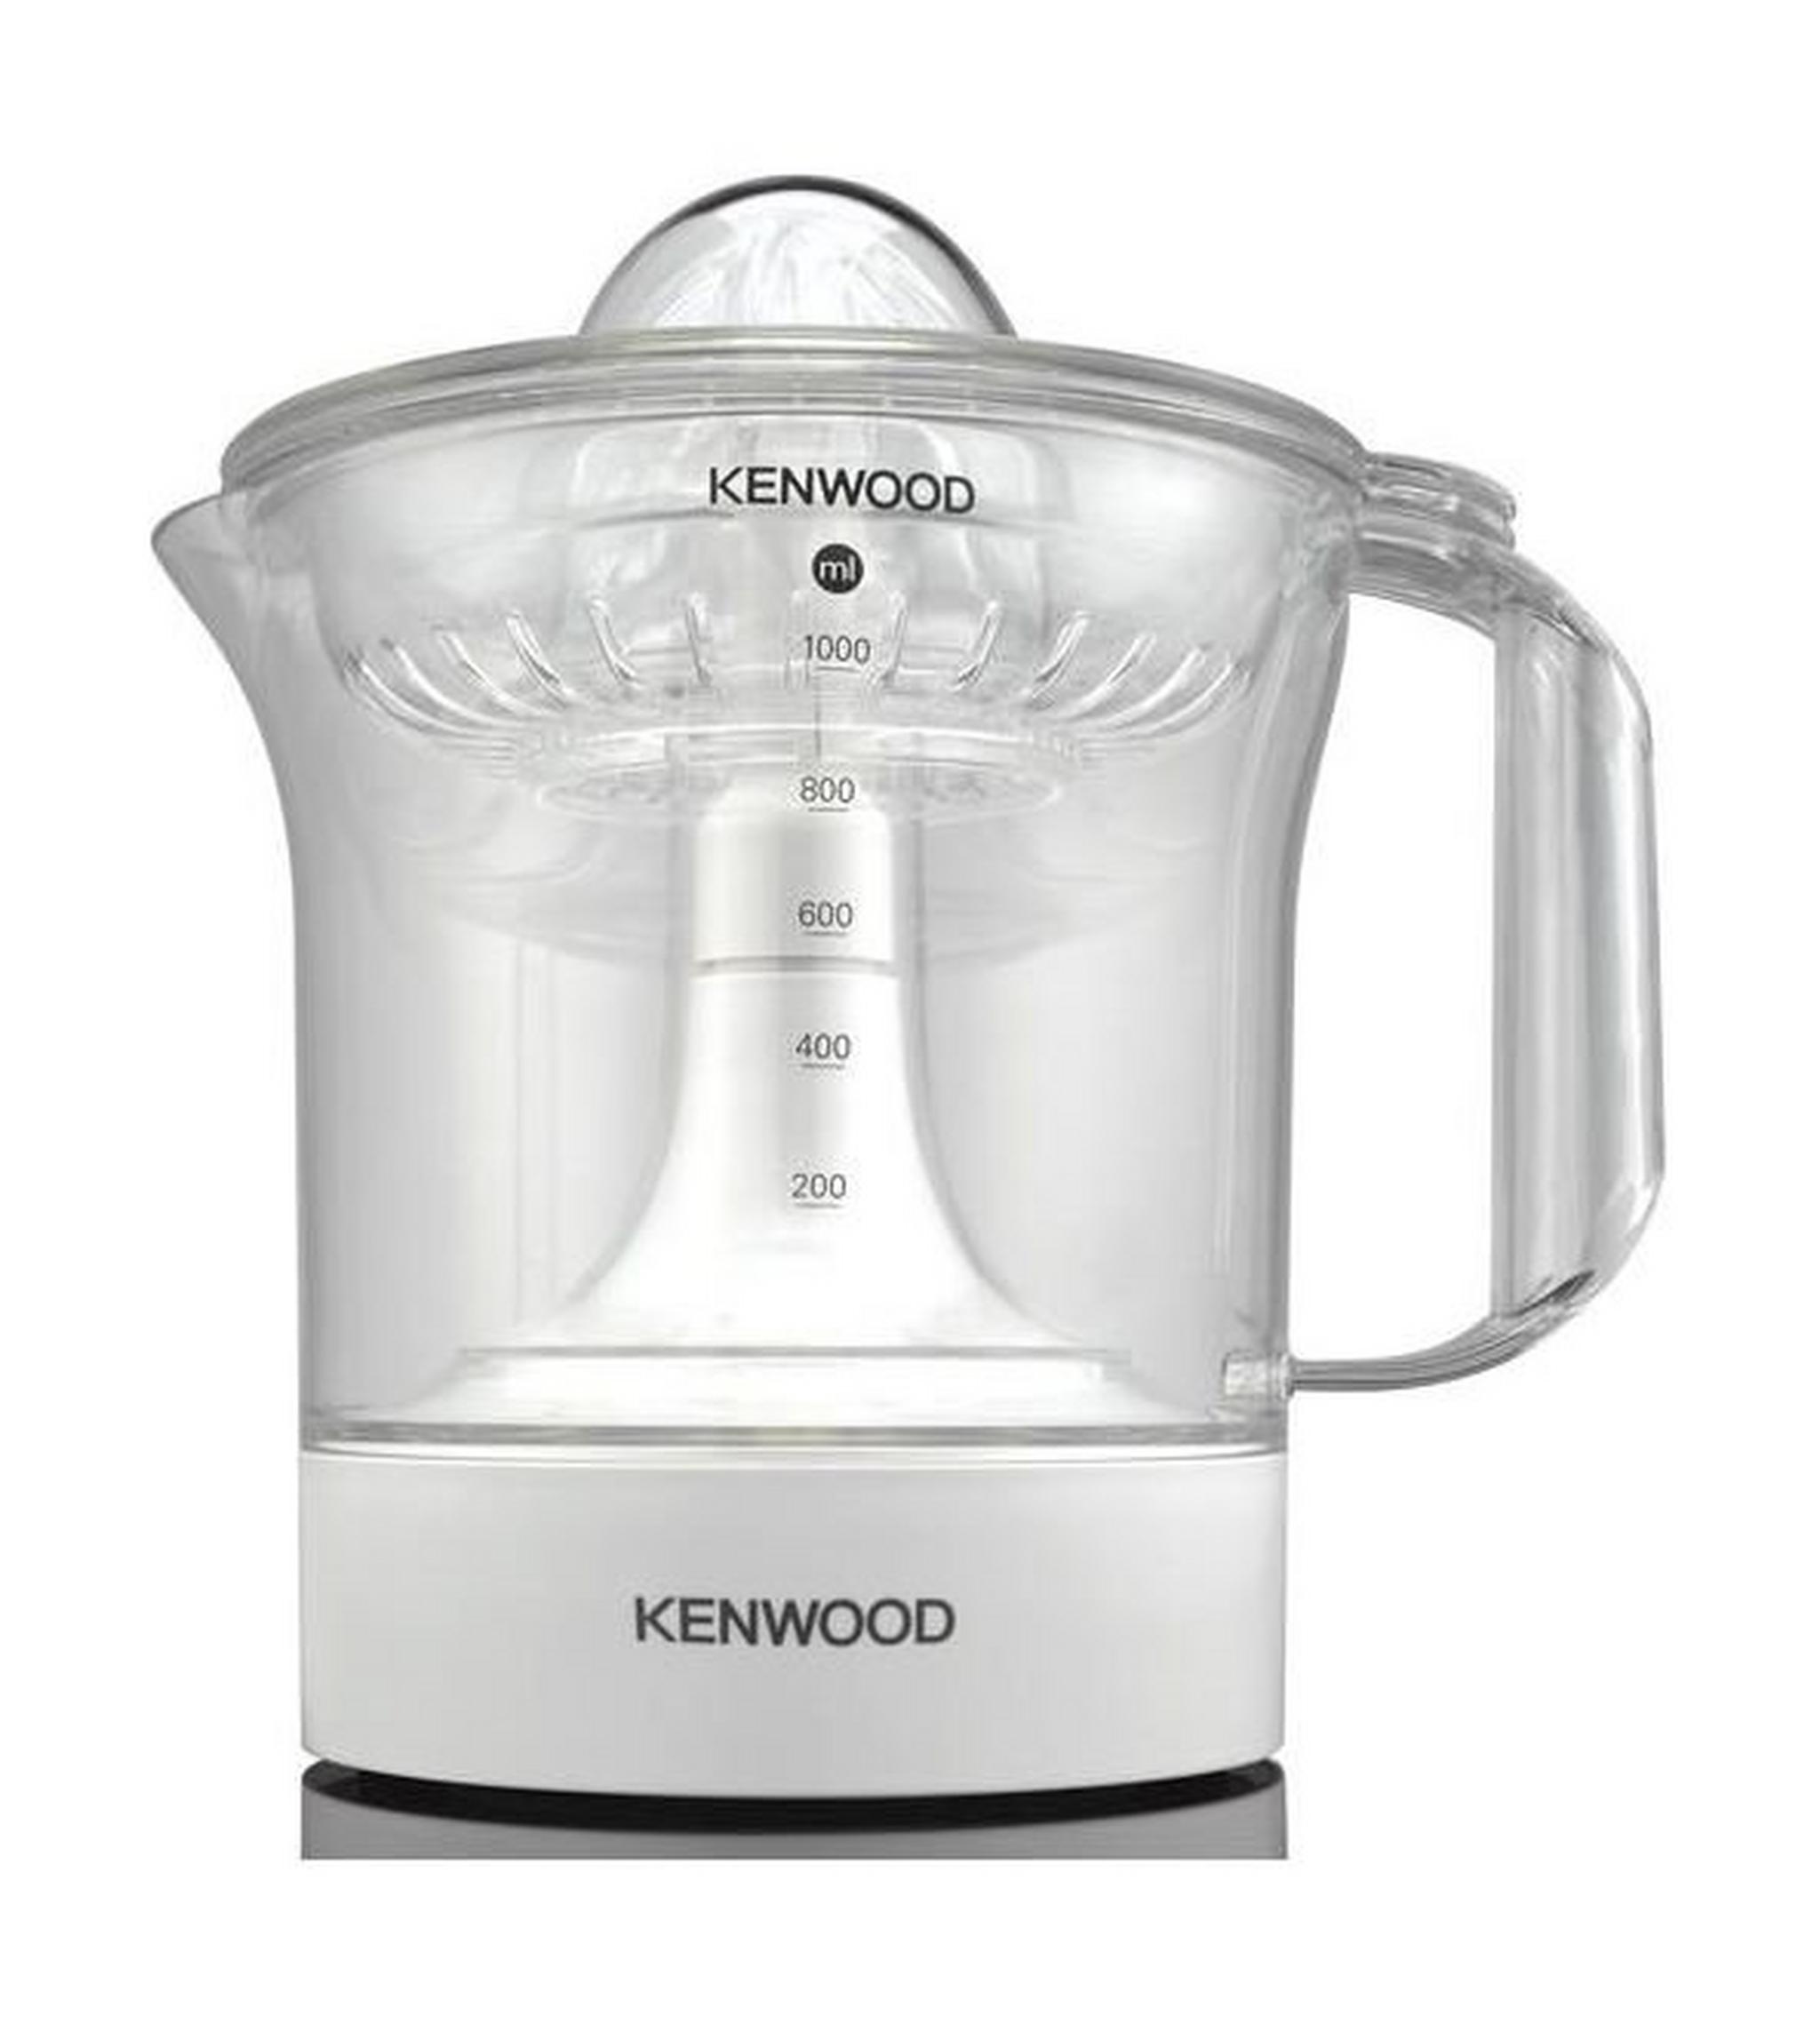 Kenwood 40W Citrus Juicer (JE290 ) - White